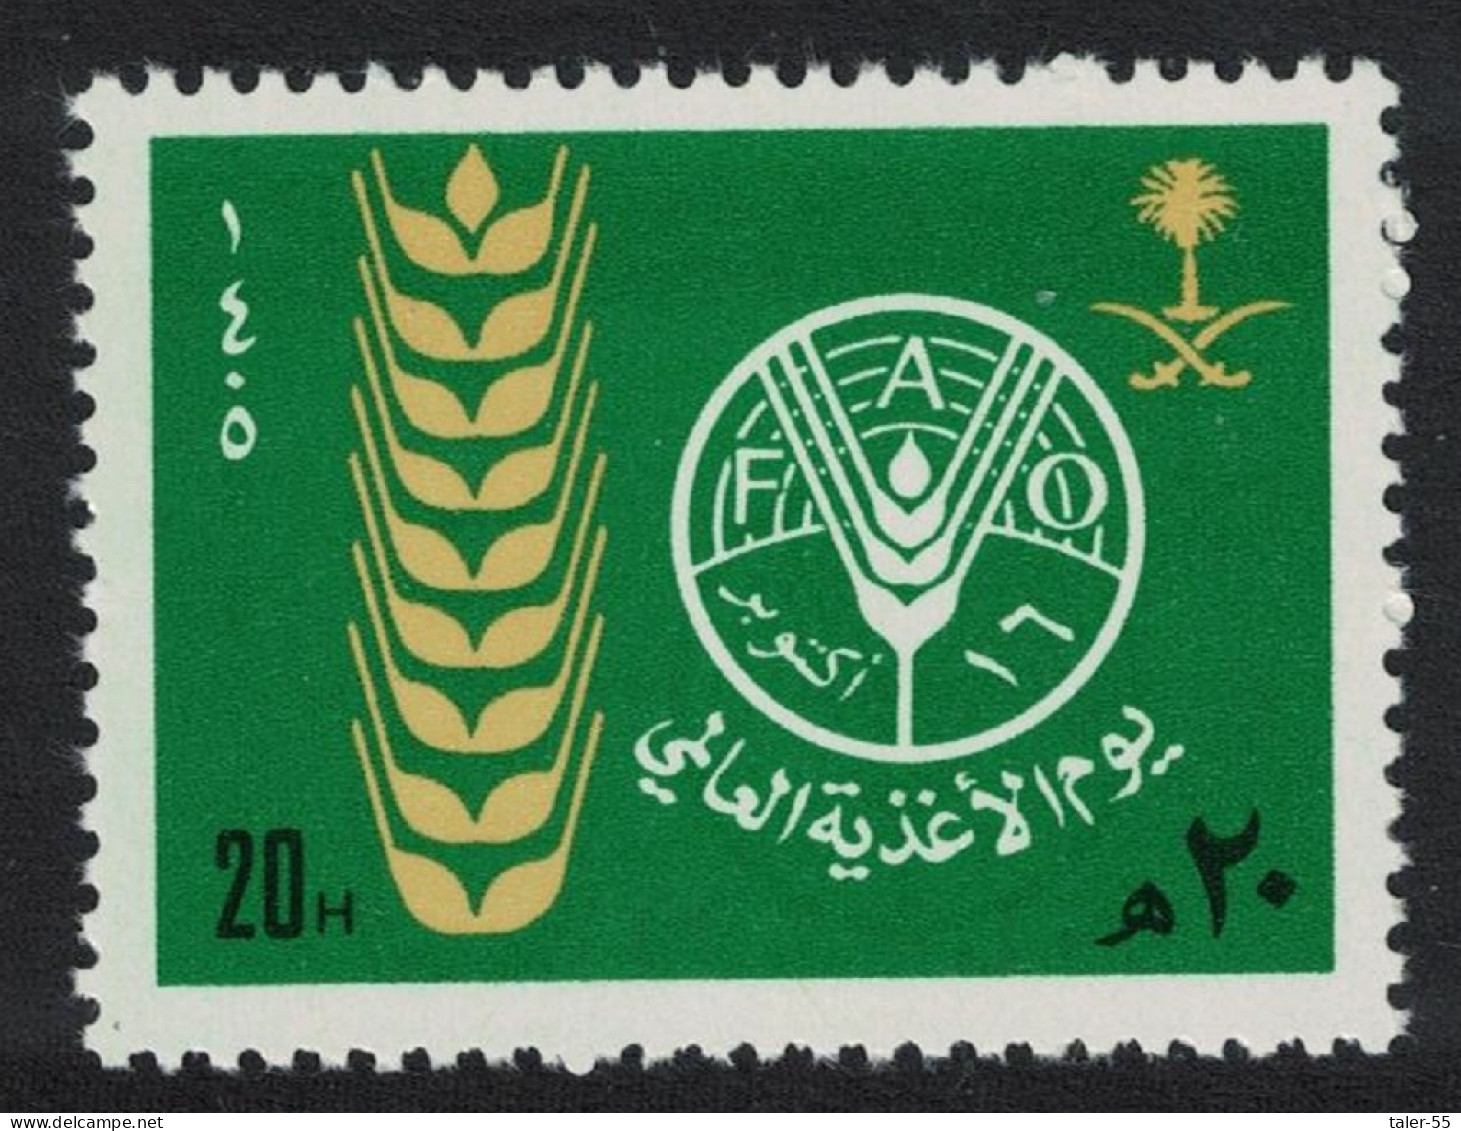 Saudi Arabia World Food Day 1984 MNH SG#1393 Sc#921 - Saudi Arabia